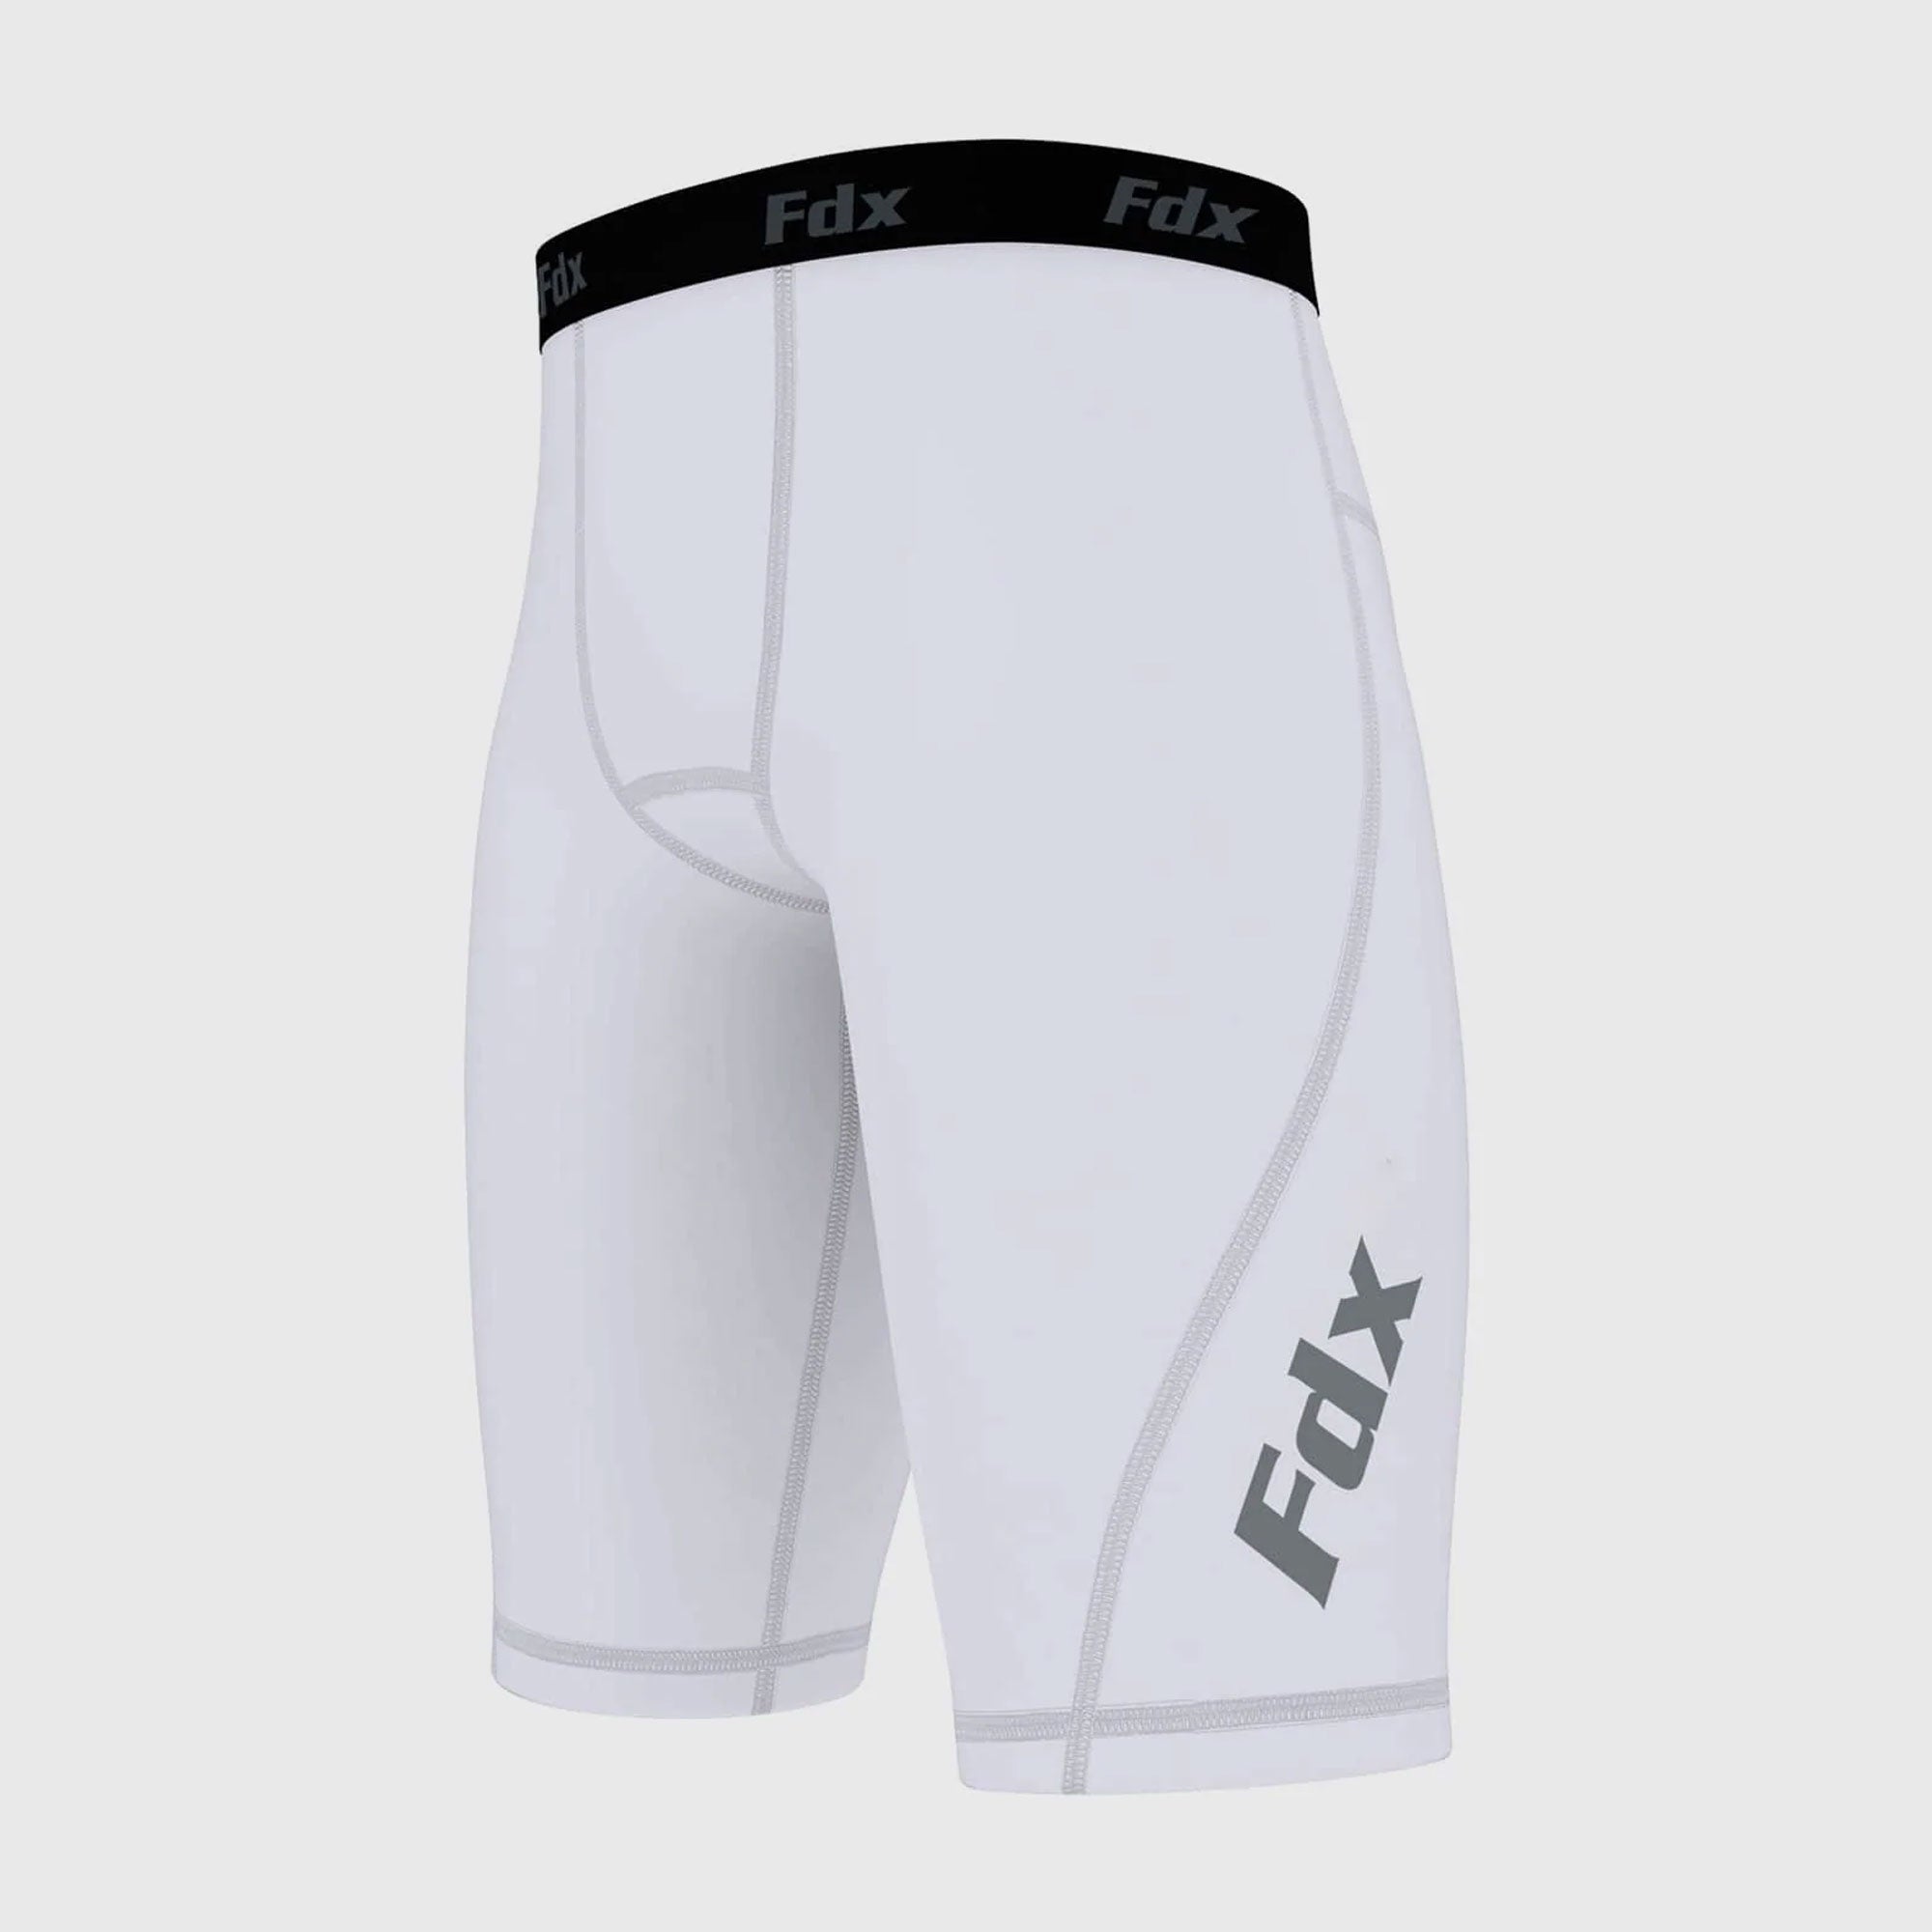 Fdx Men's White Compression Shorts Gym Workout Running Athletic Yoga Elastic Waistband Stretchable Breathable